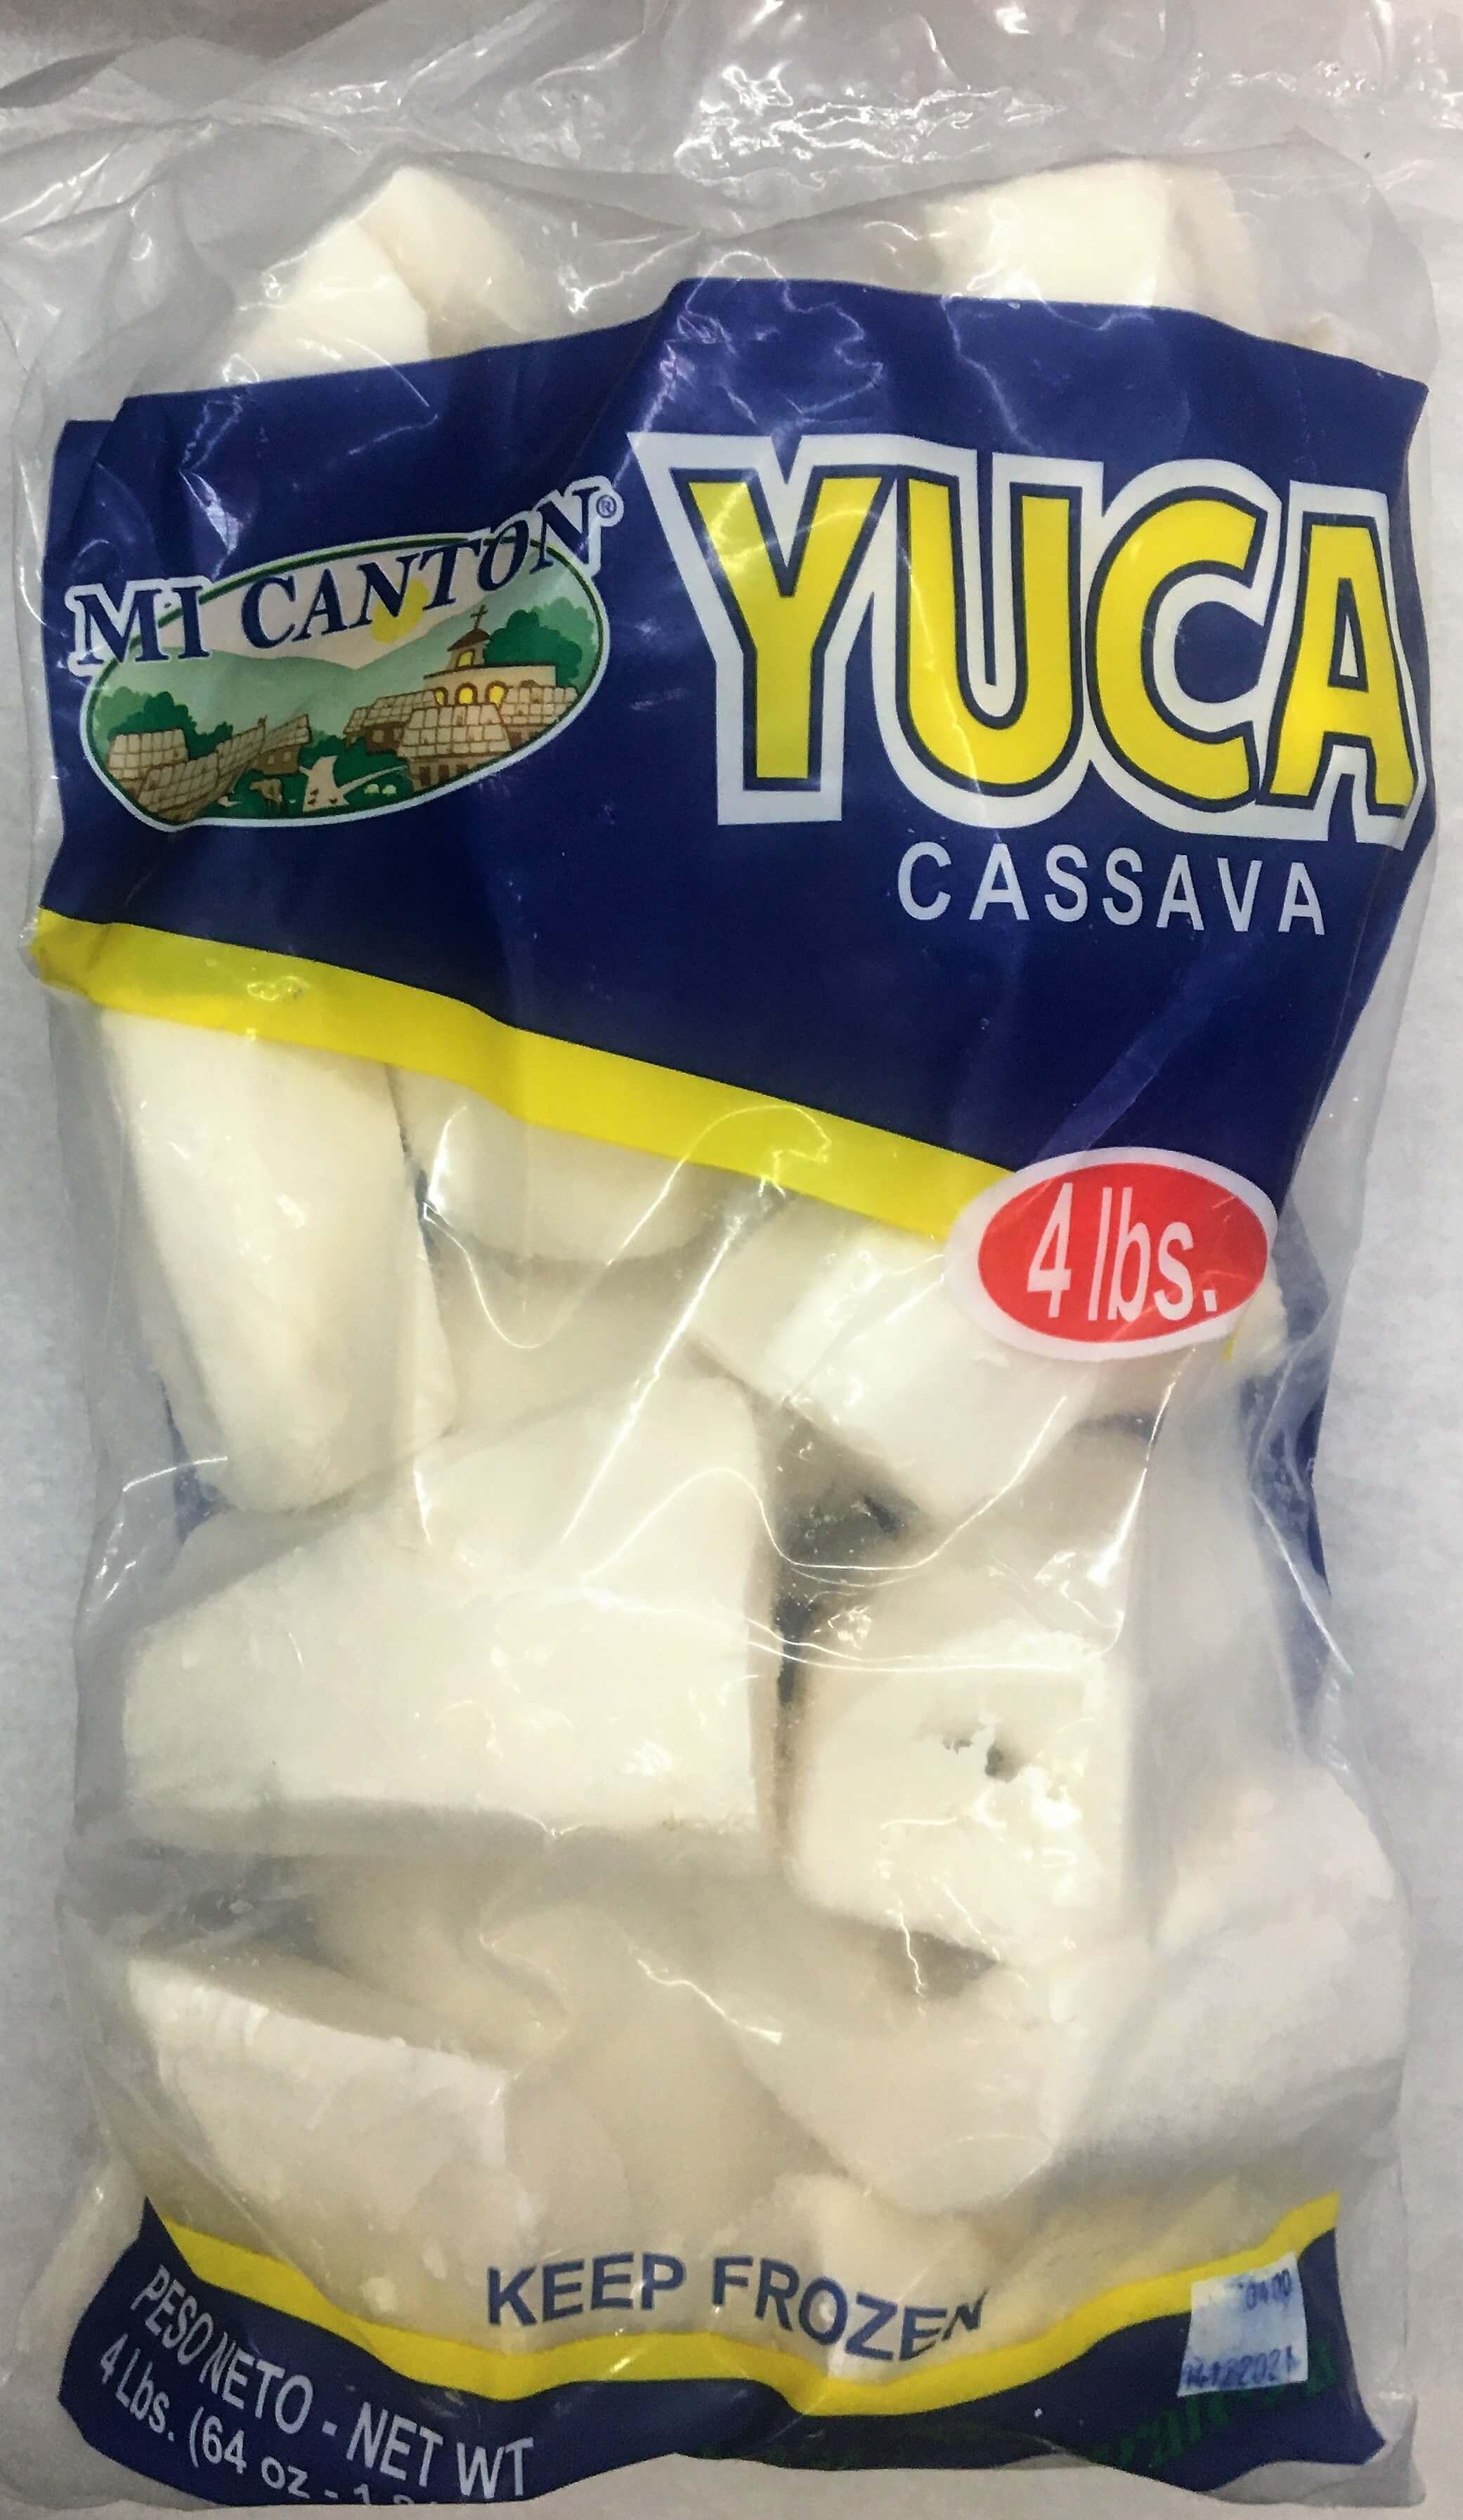 Mi Canton - Frozen Yuca Cassava 64 oz